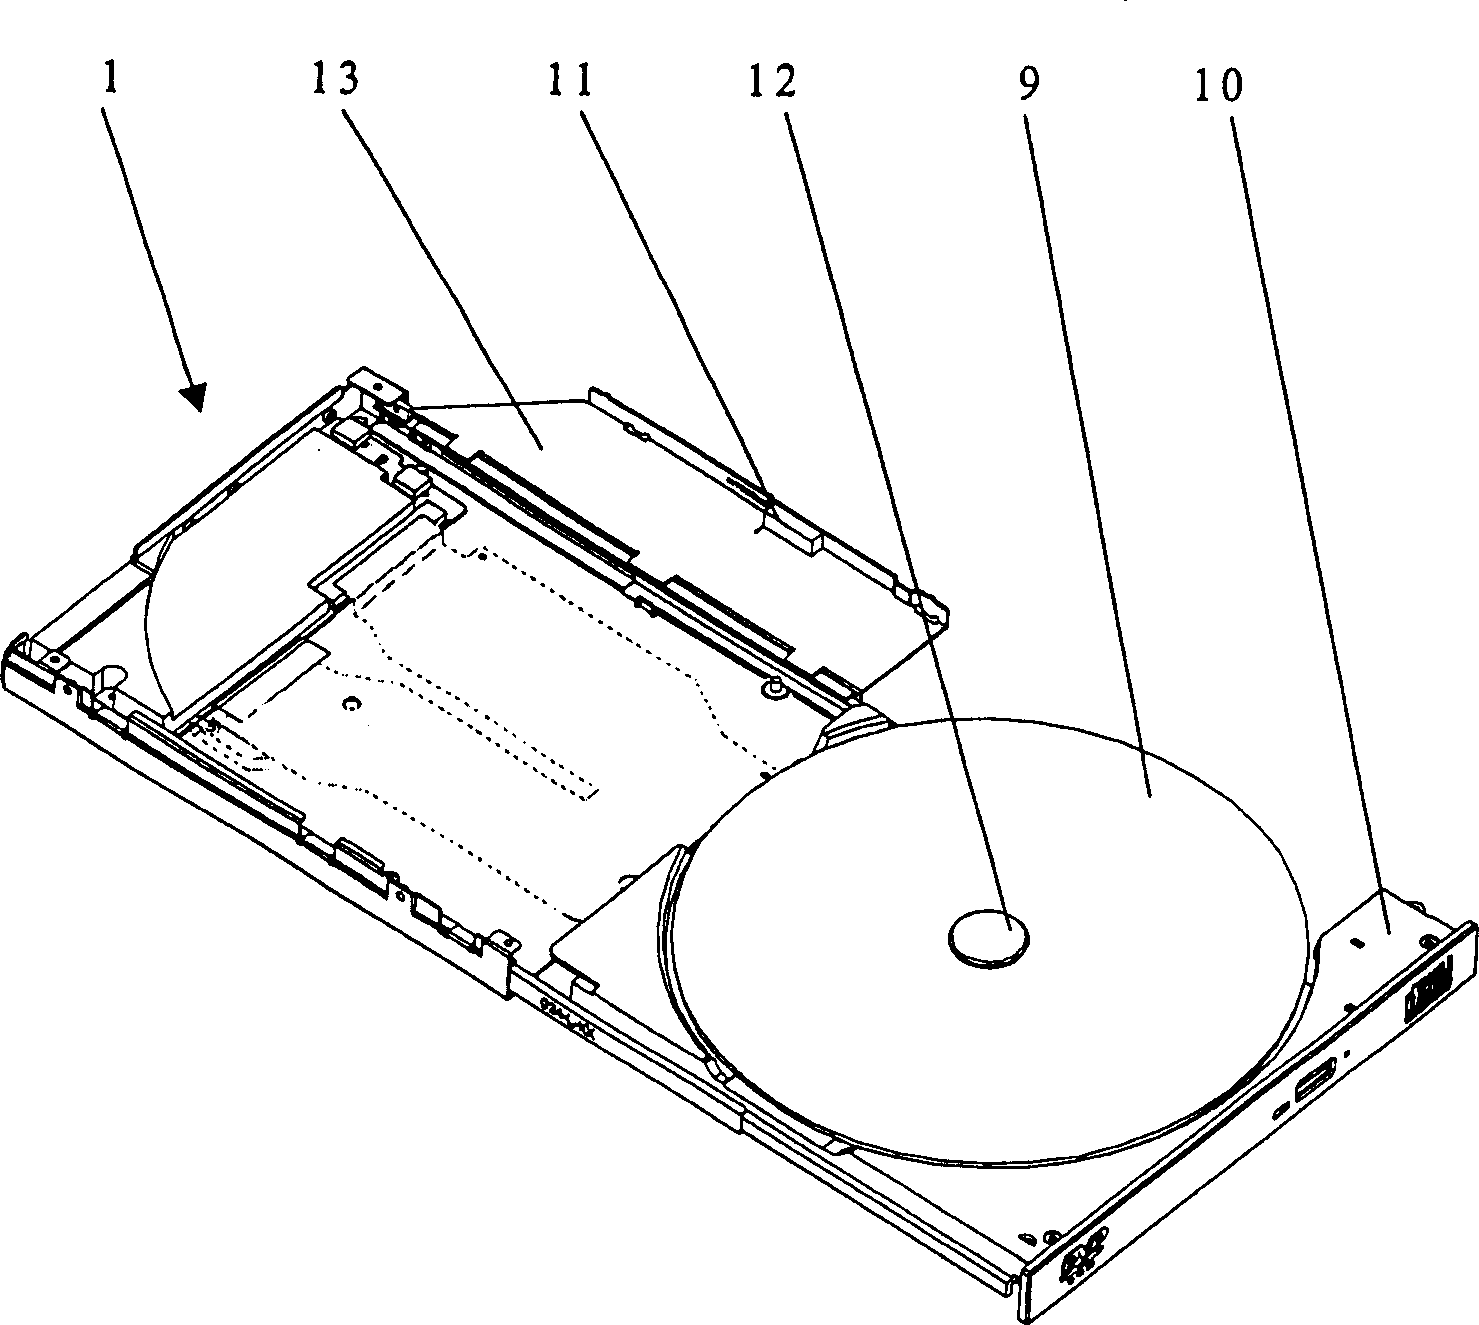 Pallet disc brake mechanism of thin disc apparatus